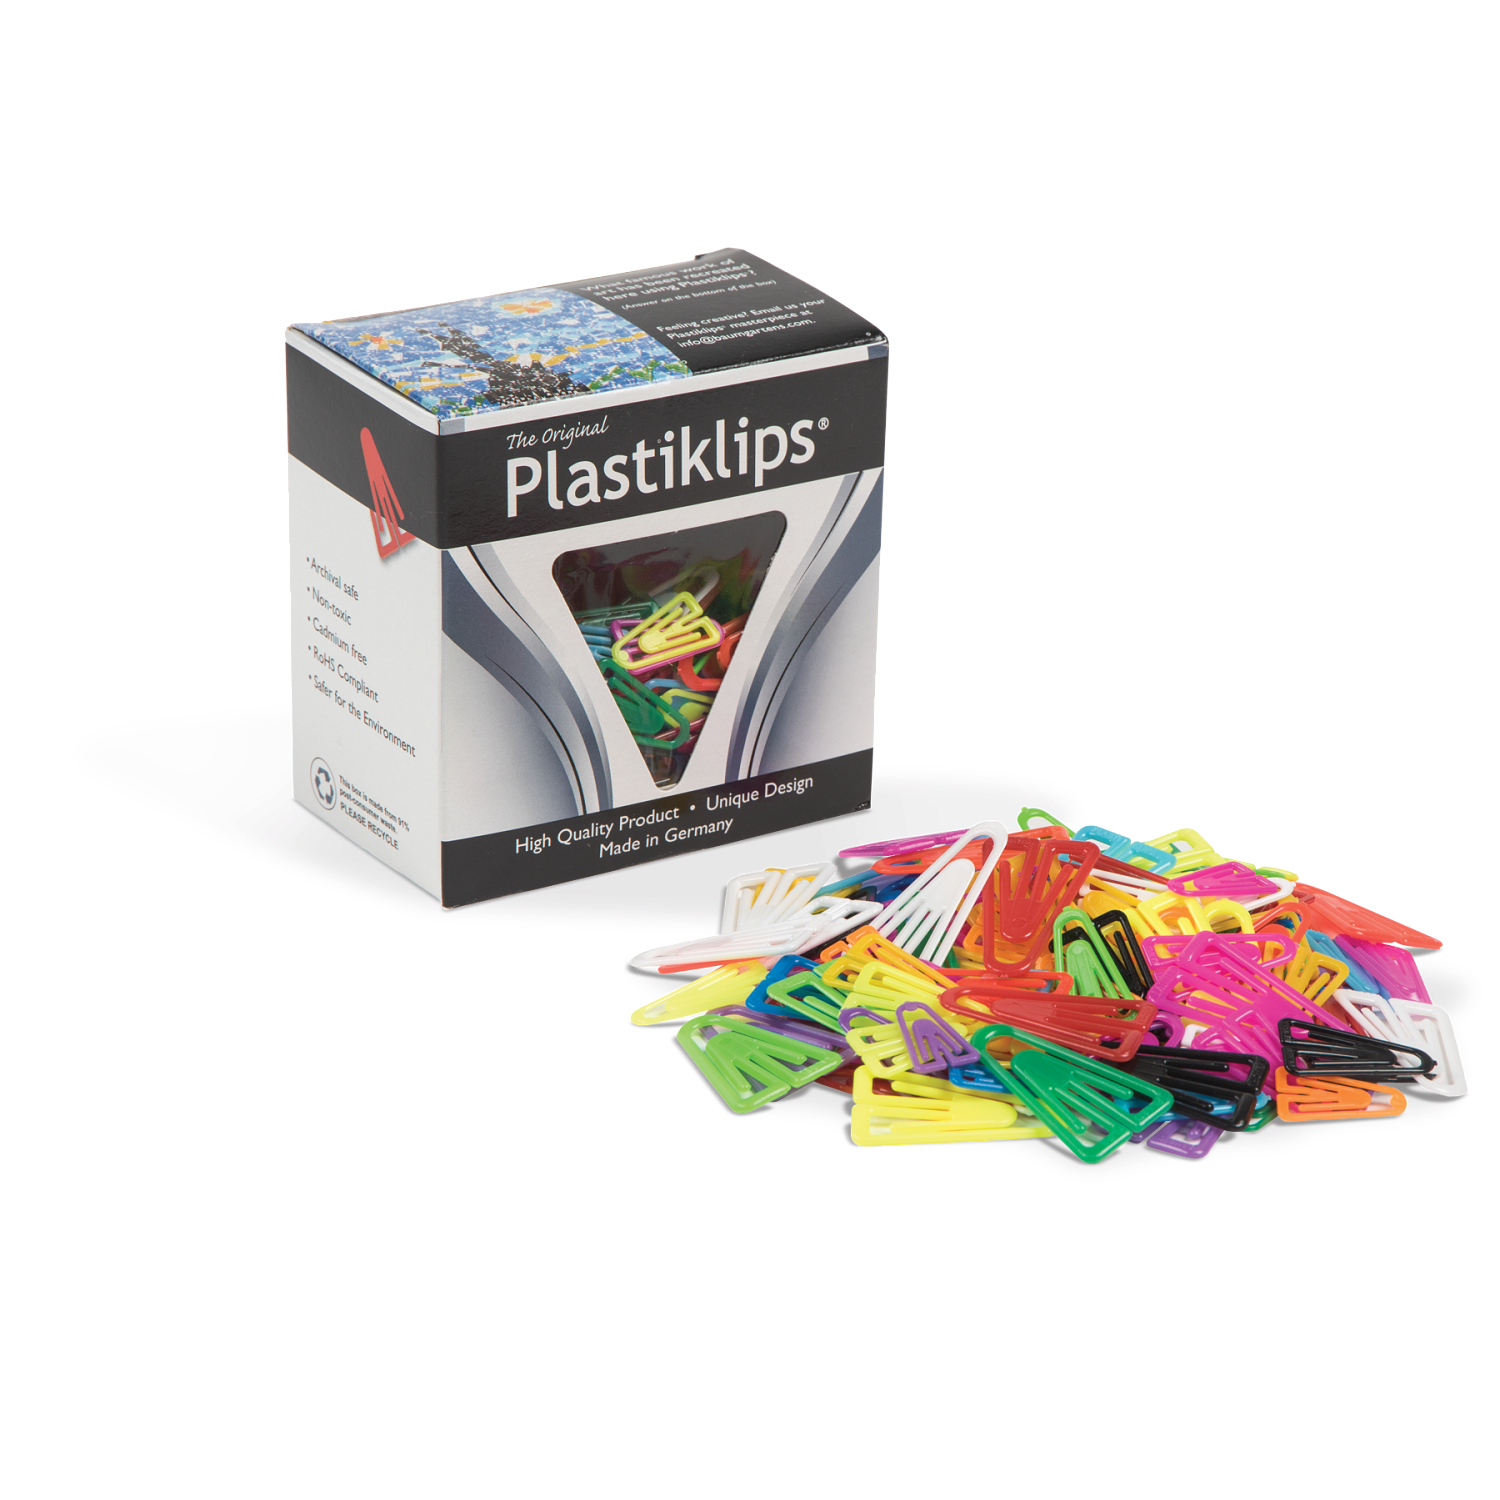 Plastiklips (Plastic Clips)